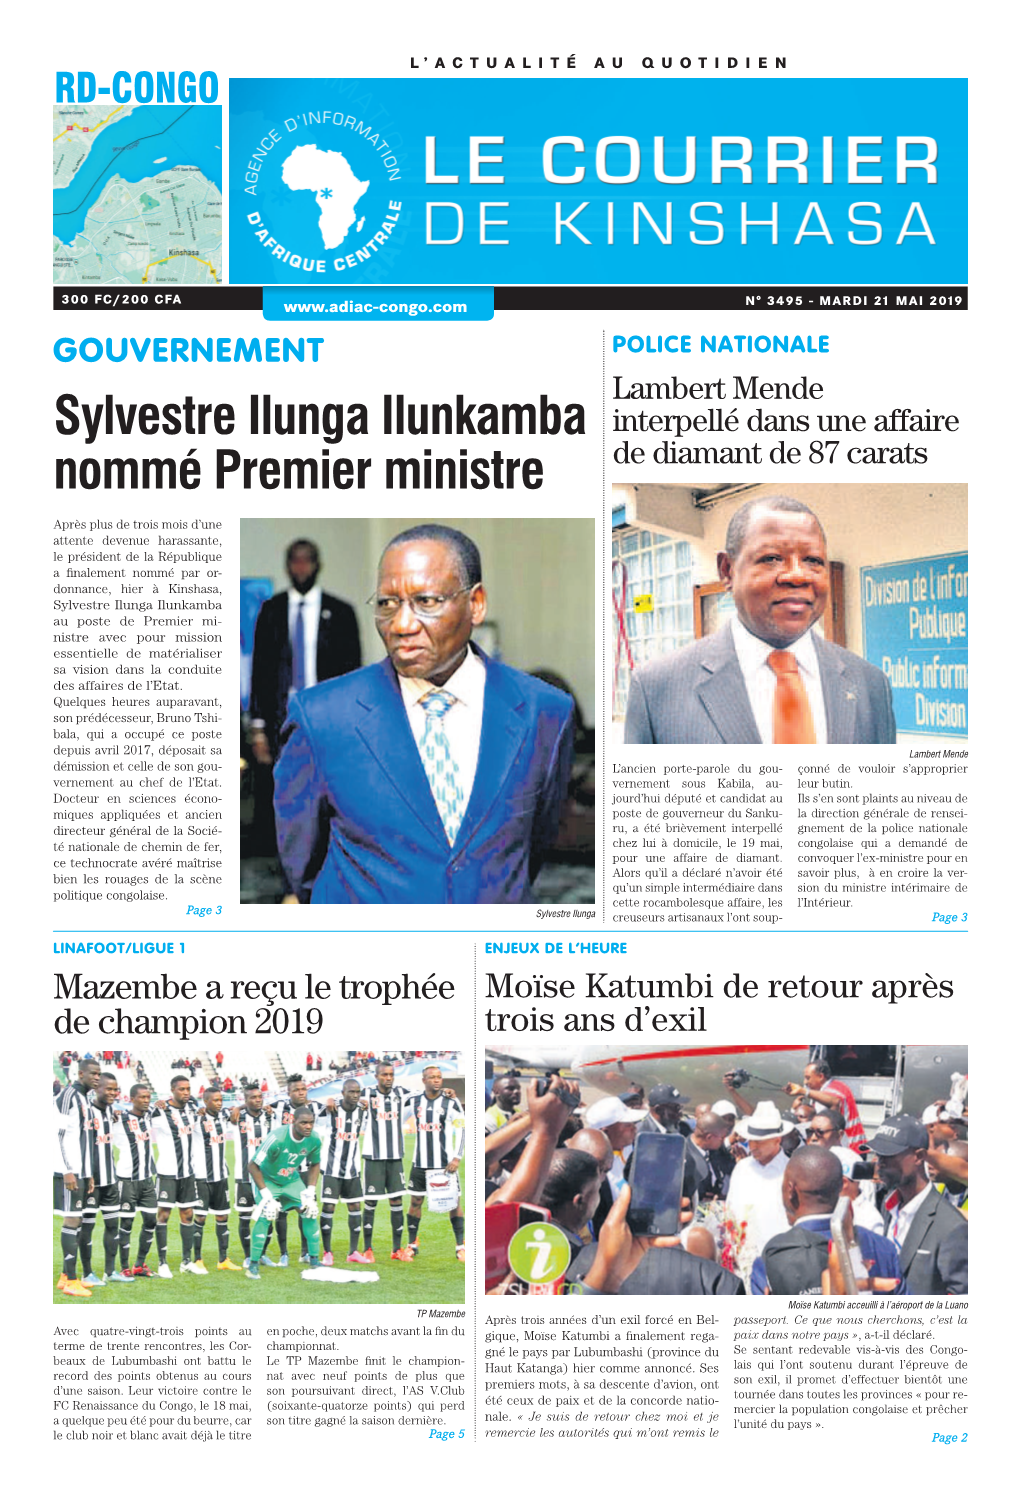 Sylvestre Ilunga Ilunkamba Nommé Premier Ministre